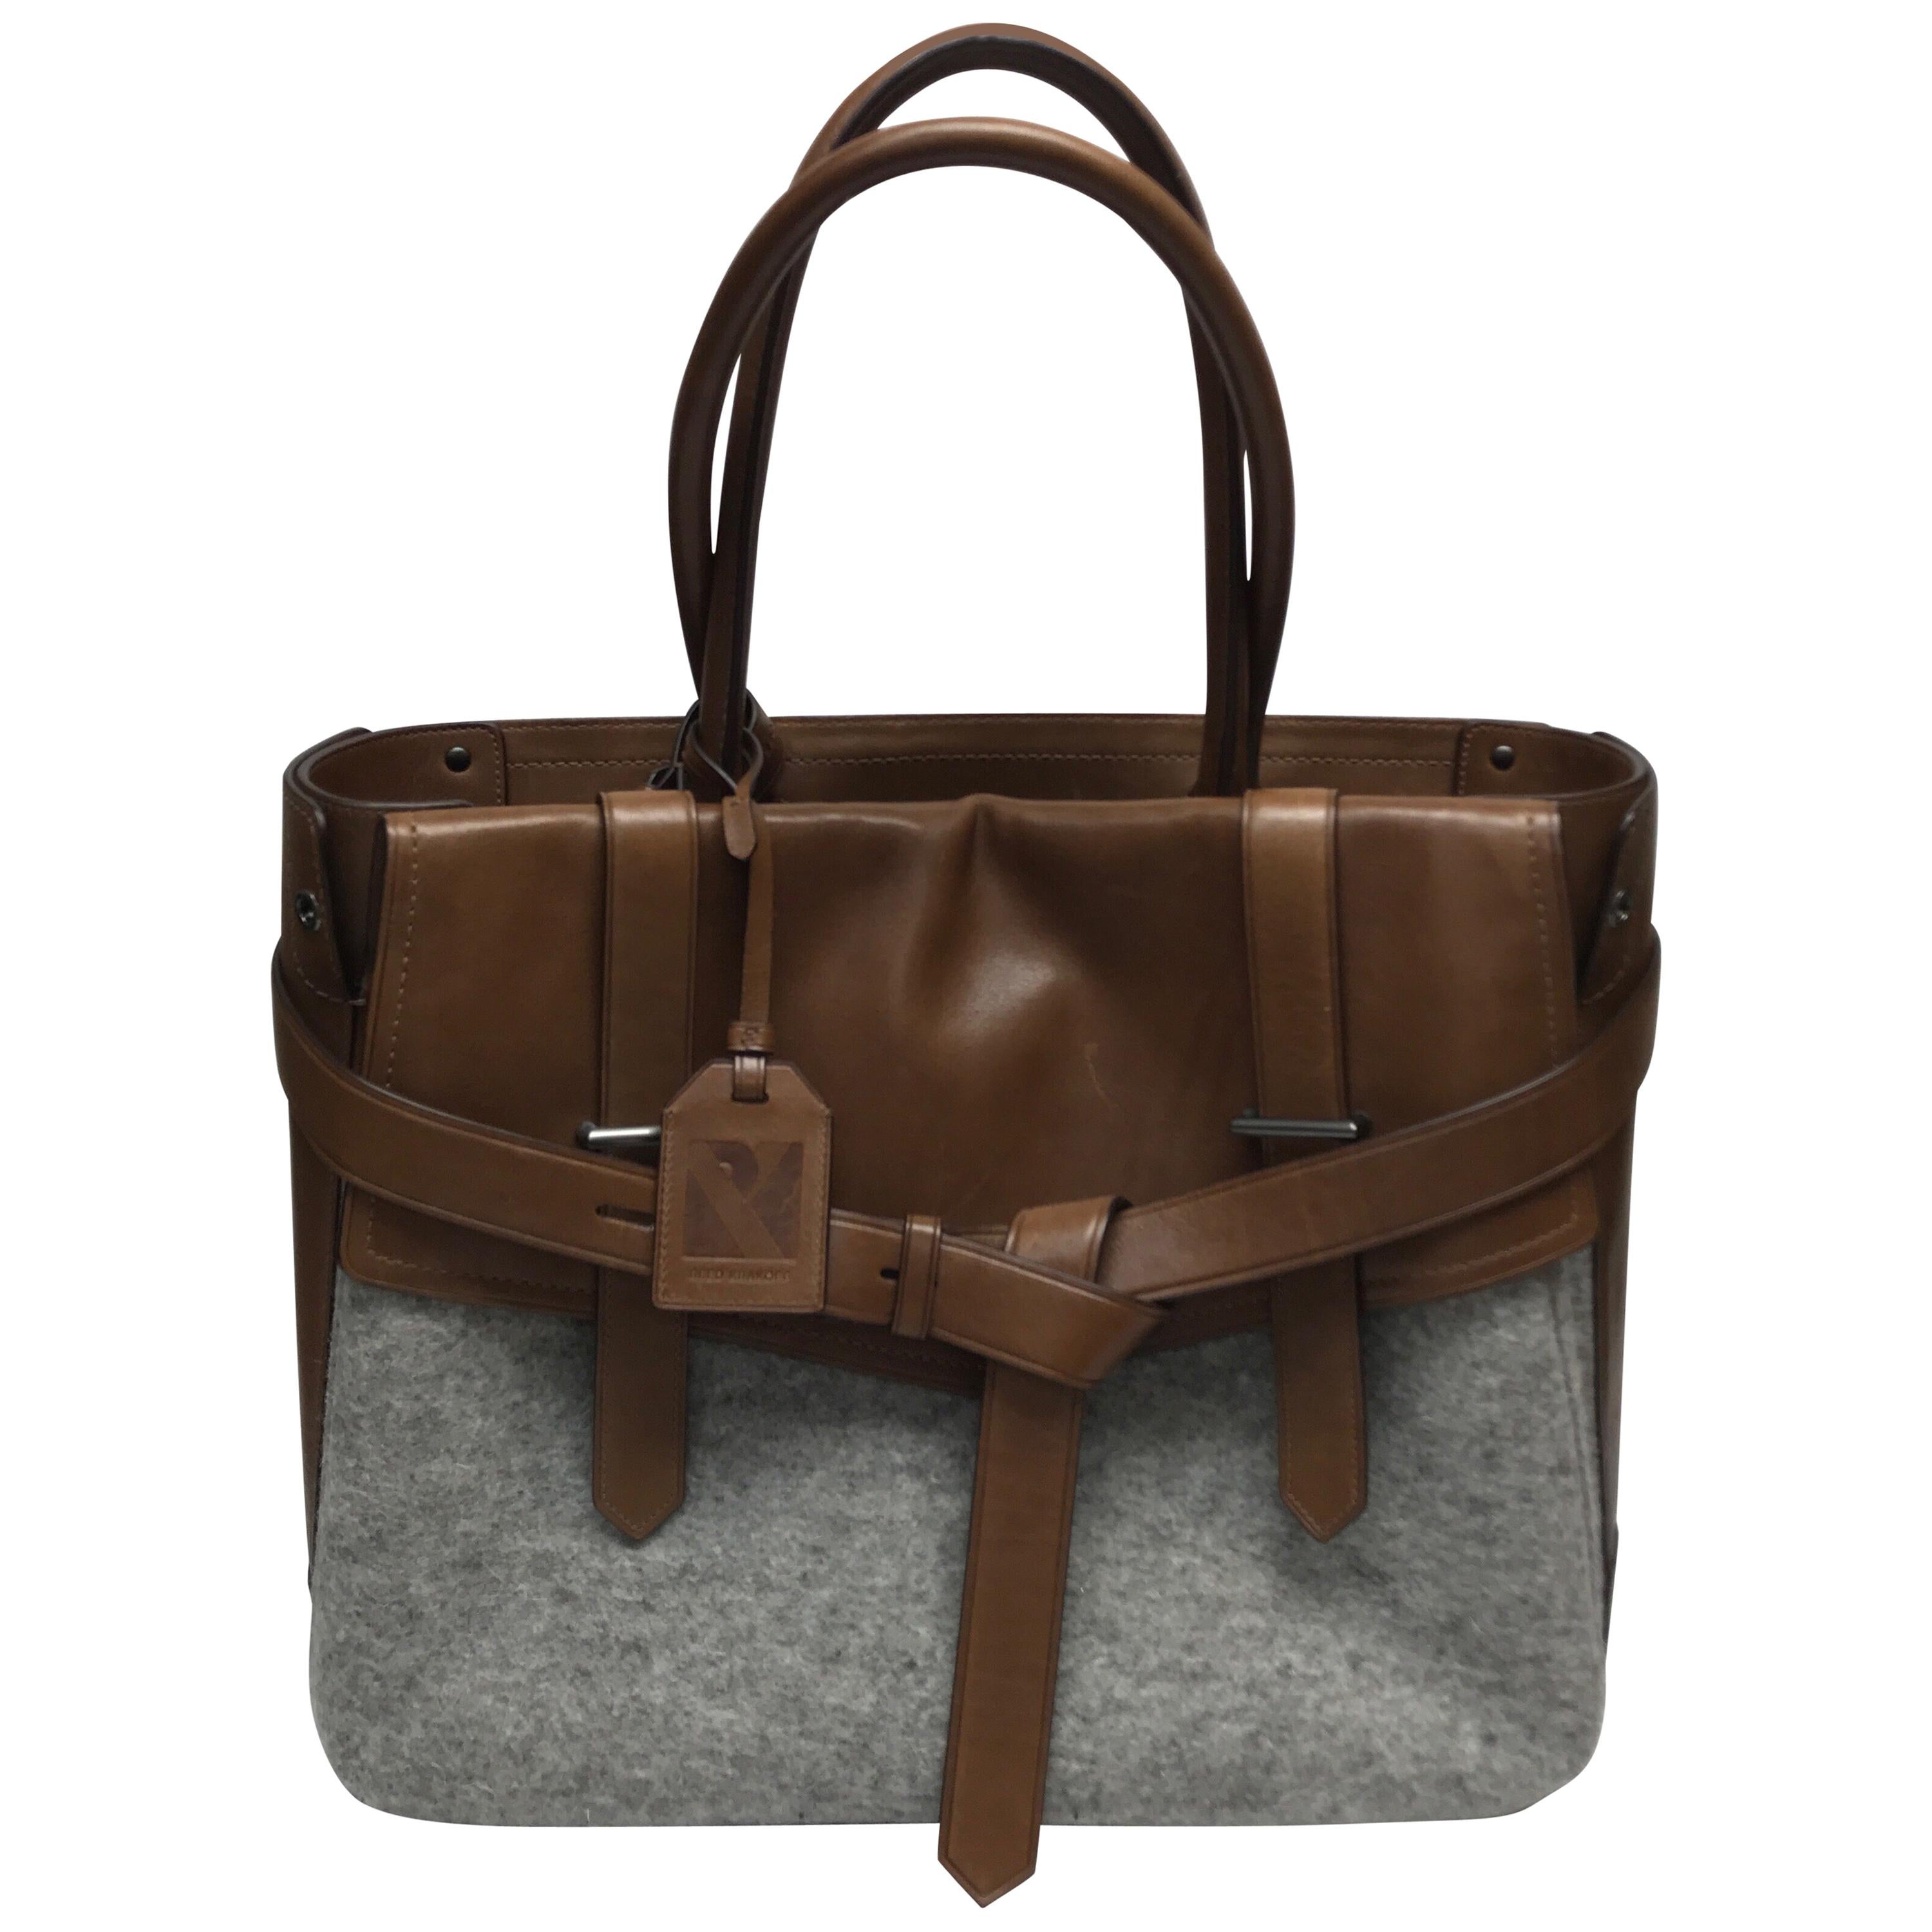 Handbags and Purses at Auction